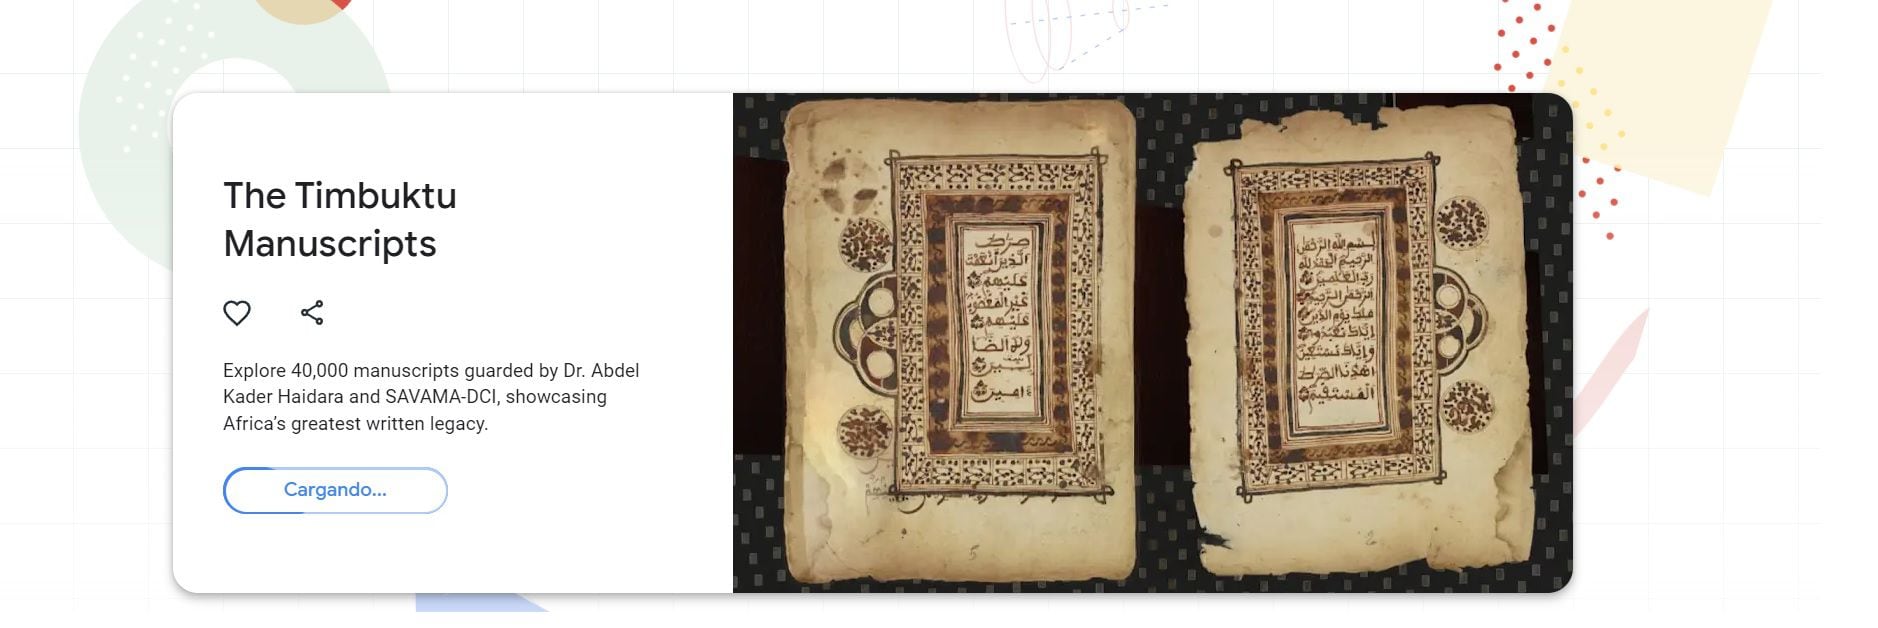 Los manuscritos de Tombuctú en Google Arts